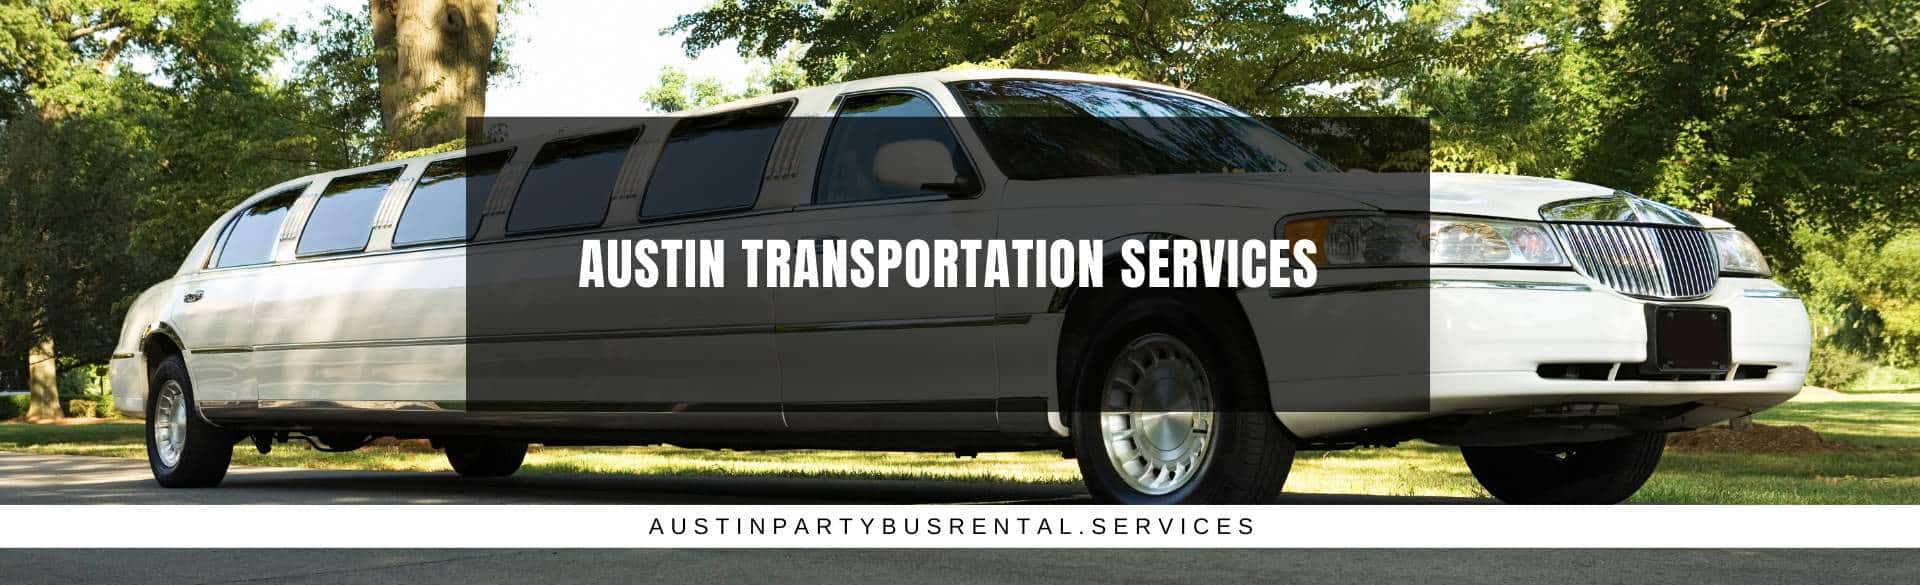 Austin Transportation Services